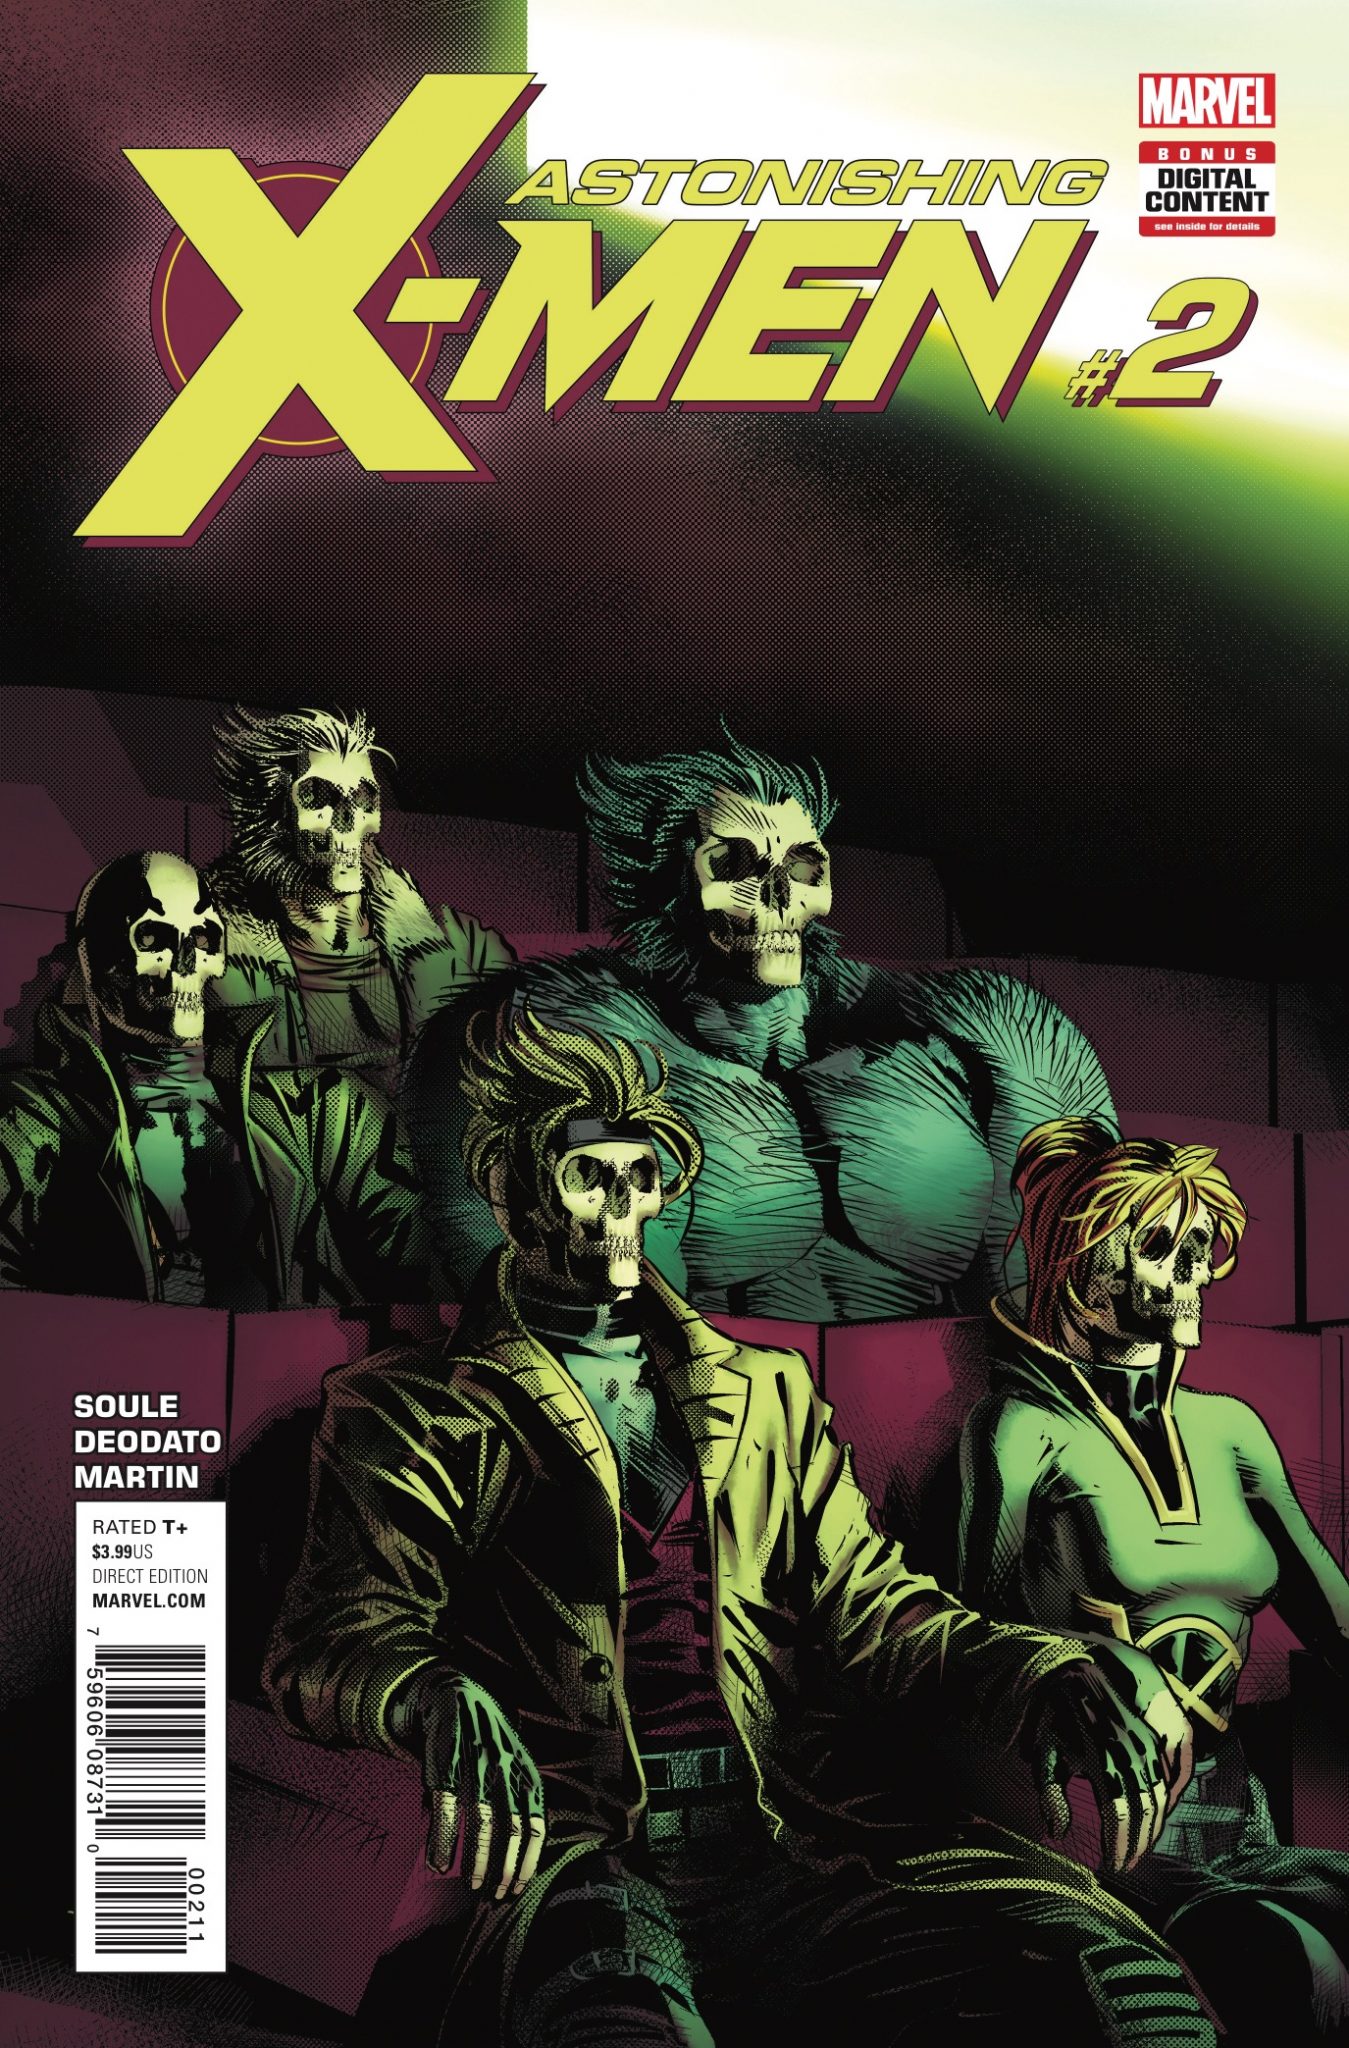 Astonishing X-Men #2 Review